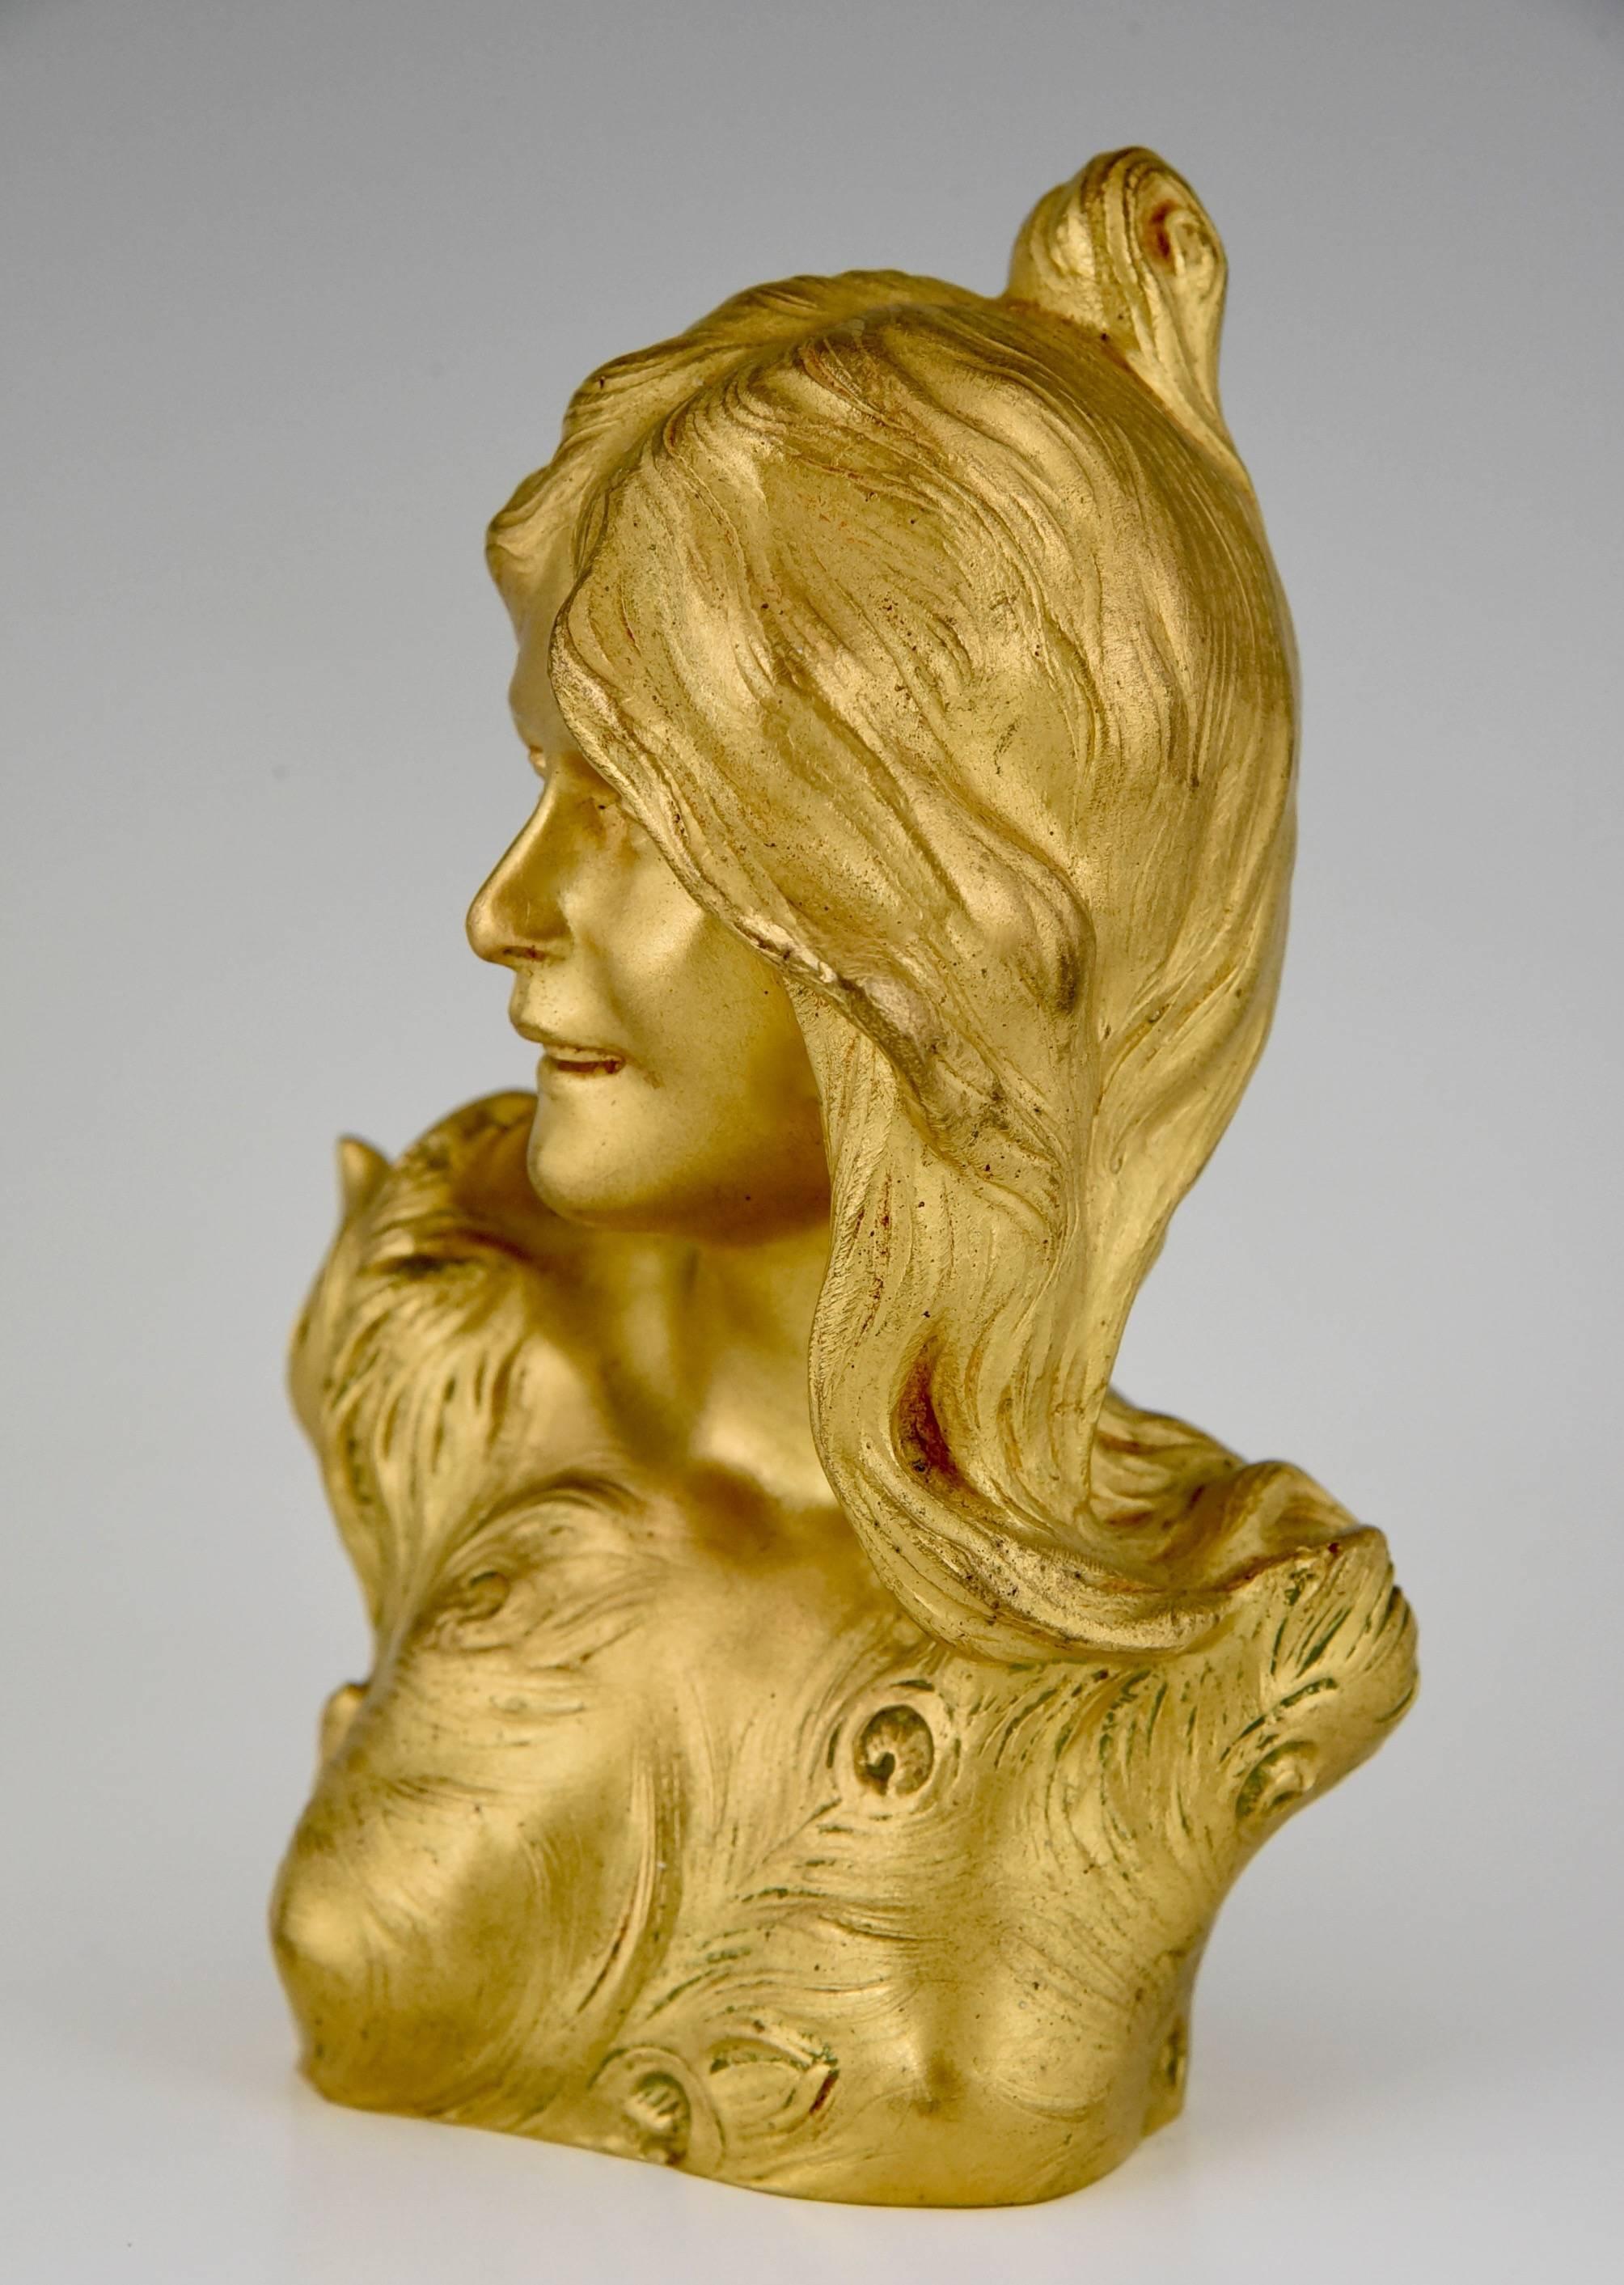 20th Century French Art Nouveau Gilt Bronze sculpture Bust of a lady by Leopold Savine 1905